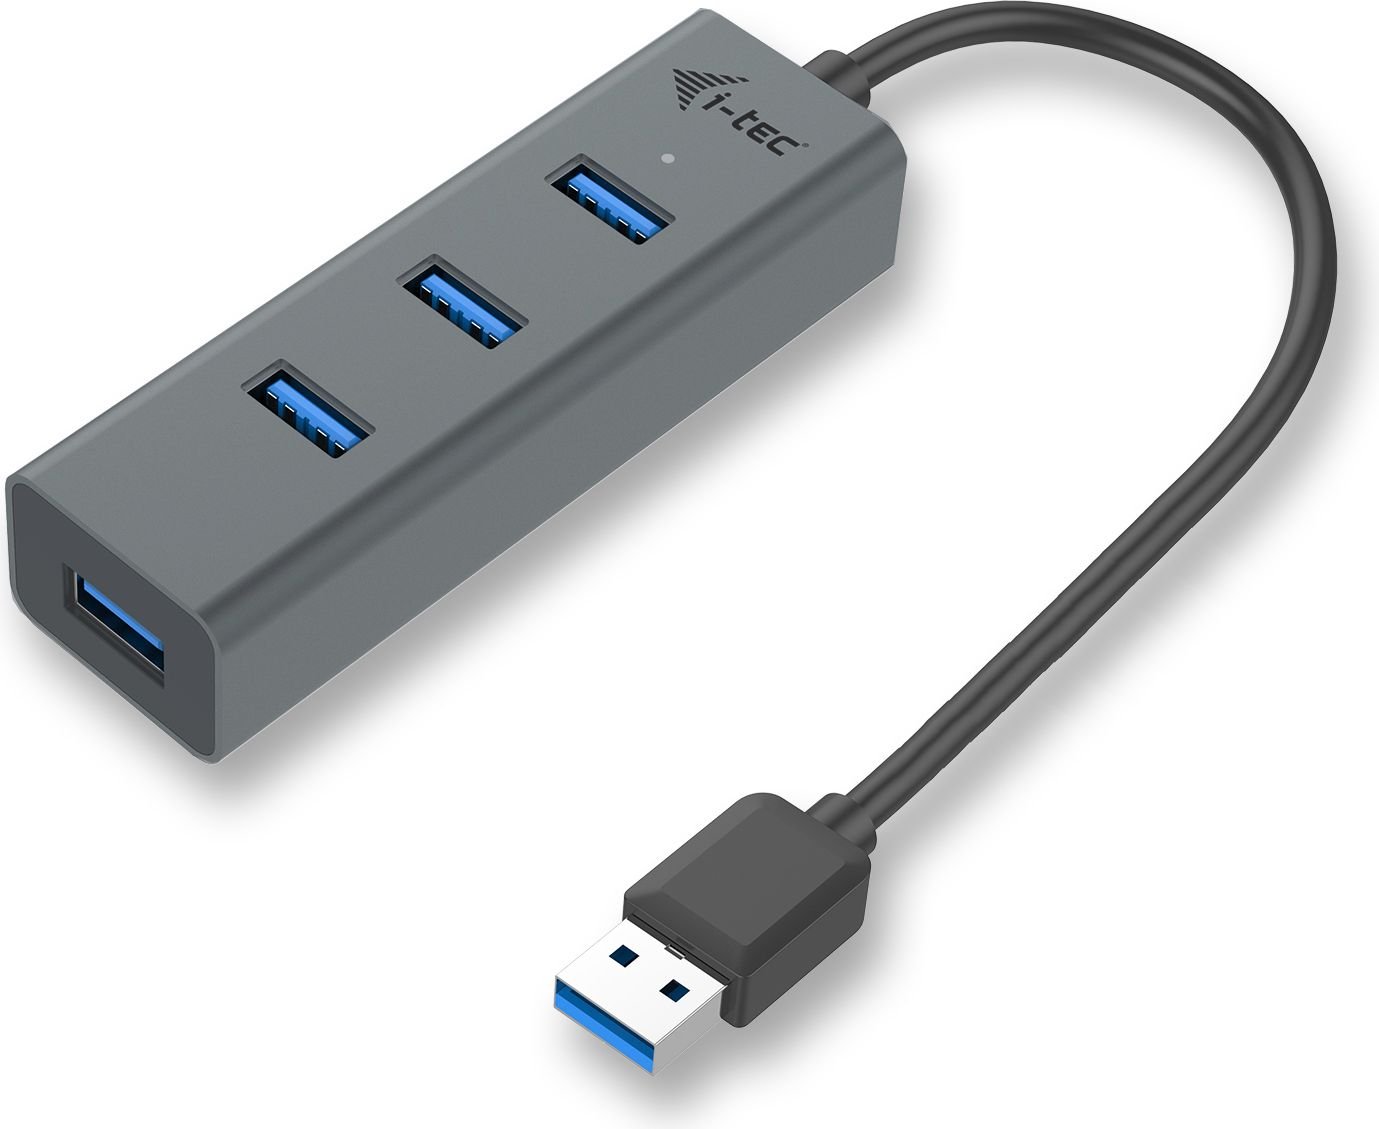 Hub-uri - Hub USB 3.0 iTec cu 4 porturi, pasiv, metal, gri cu negru